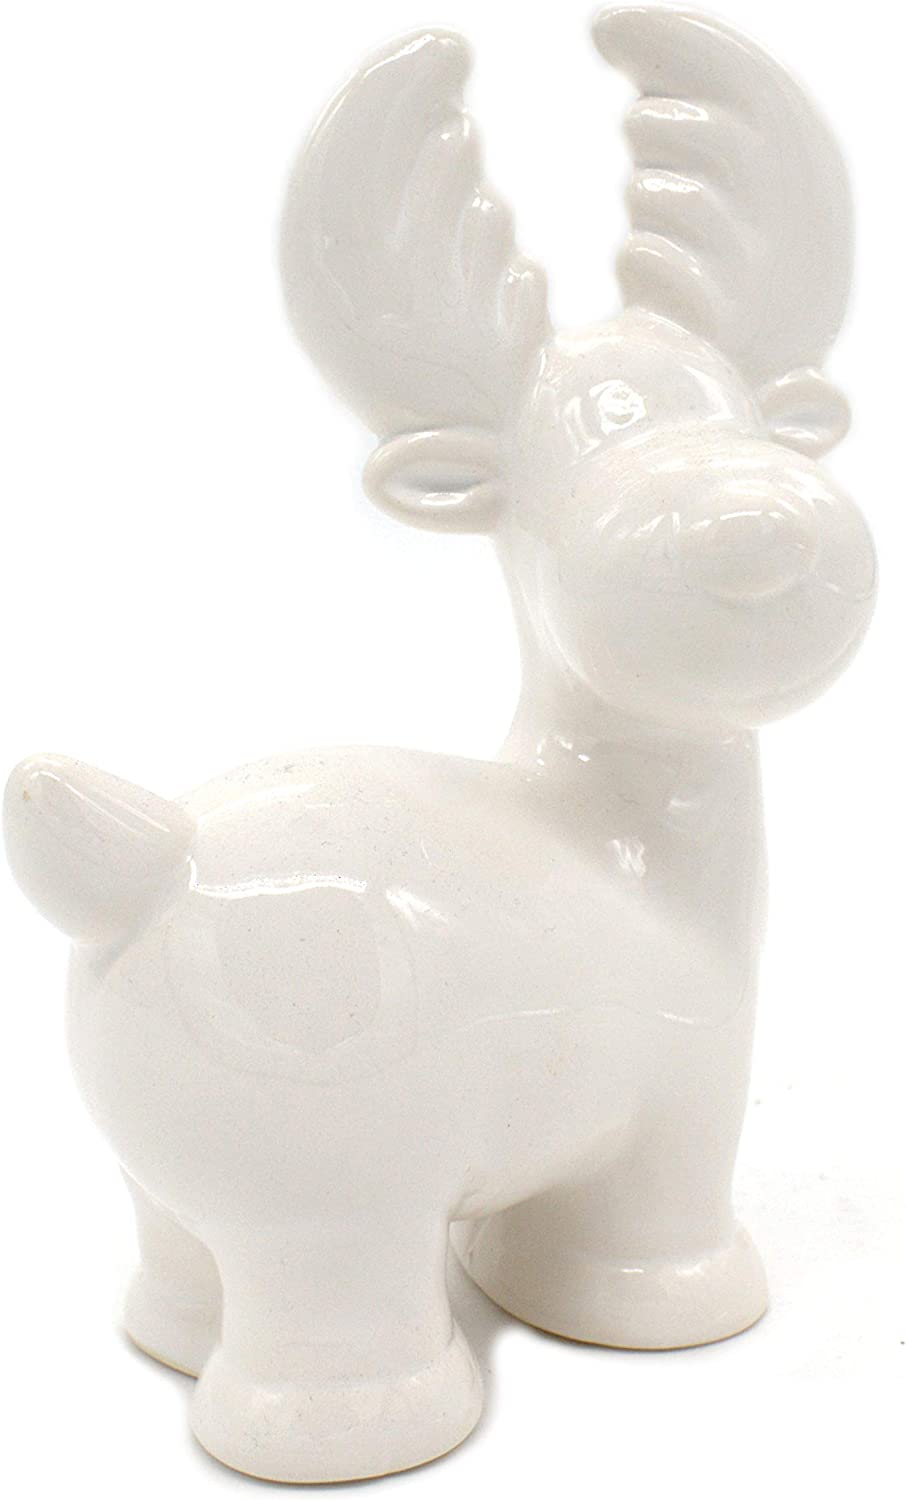 DARO DEKO Ceramic Stag Figurine White